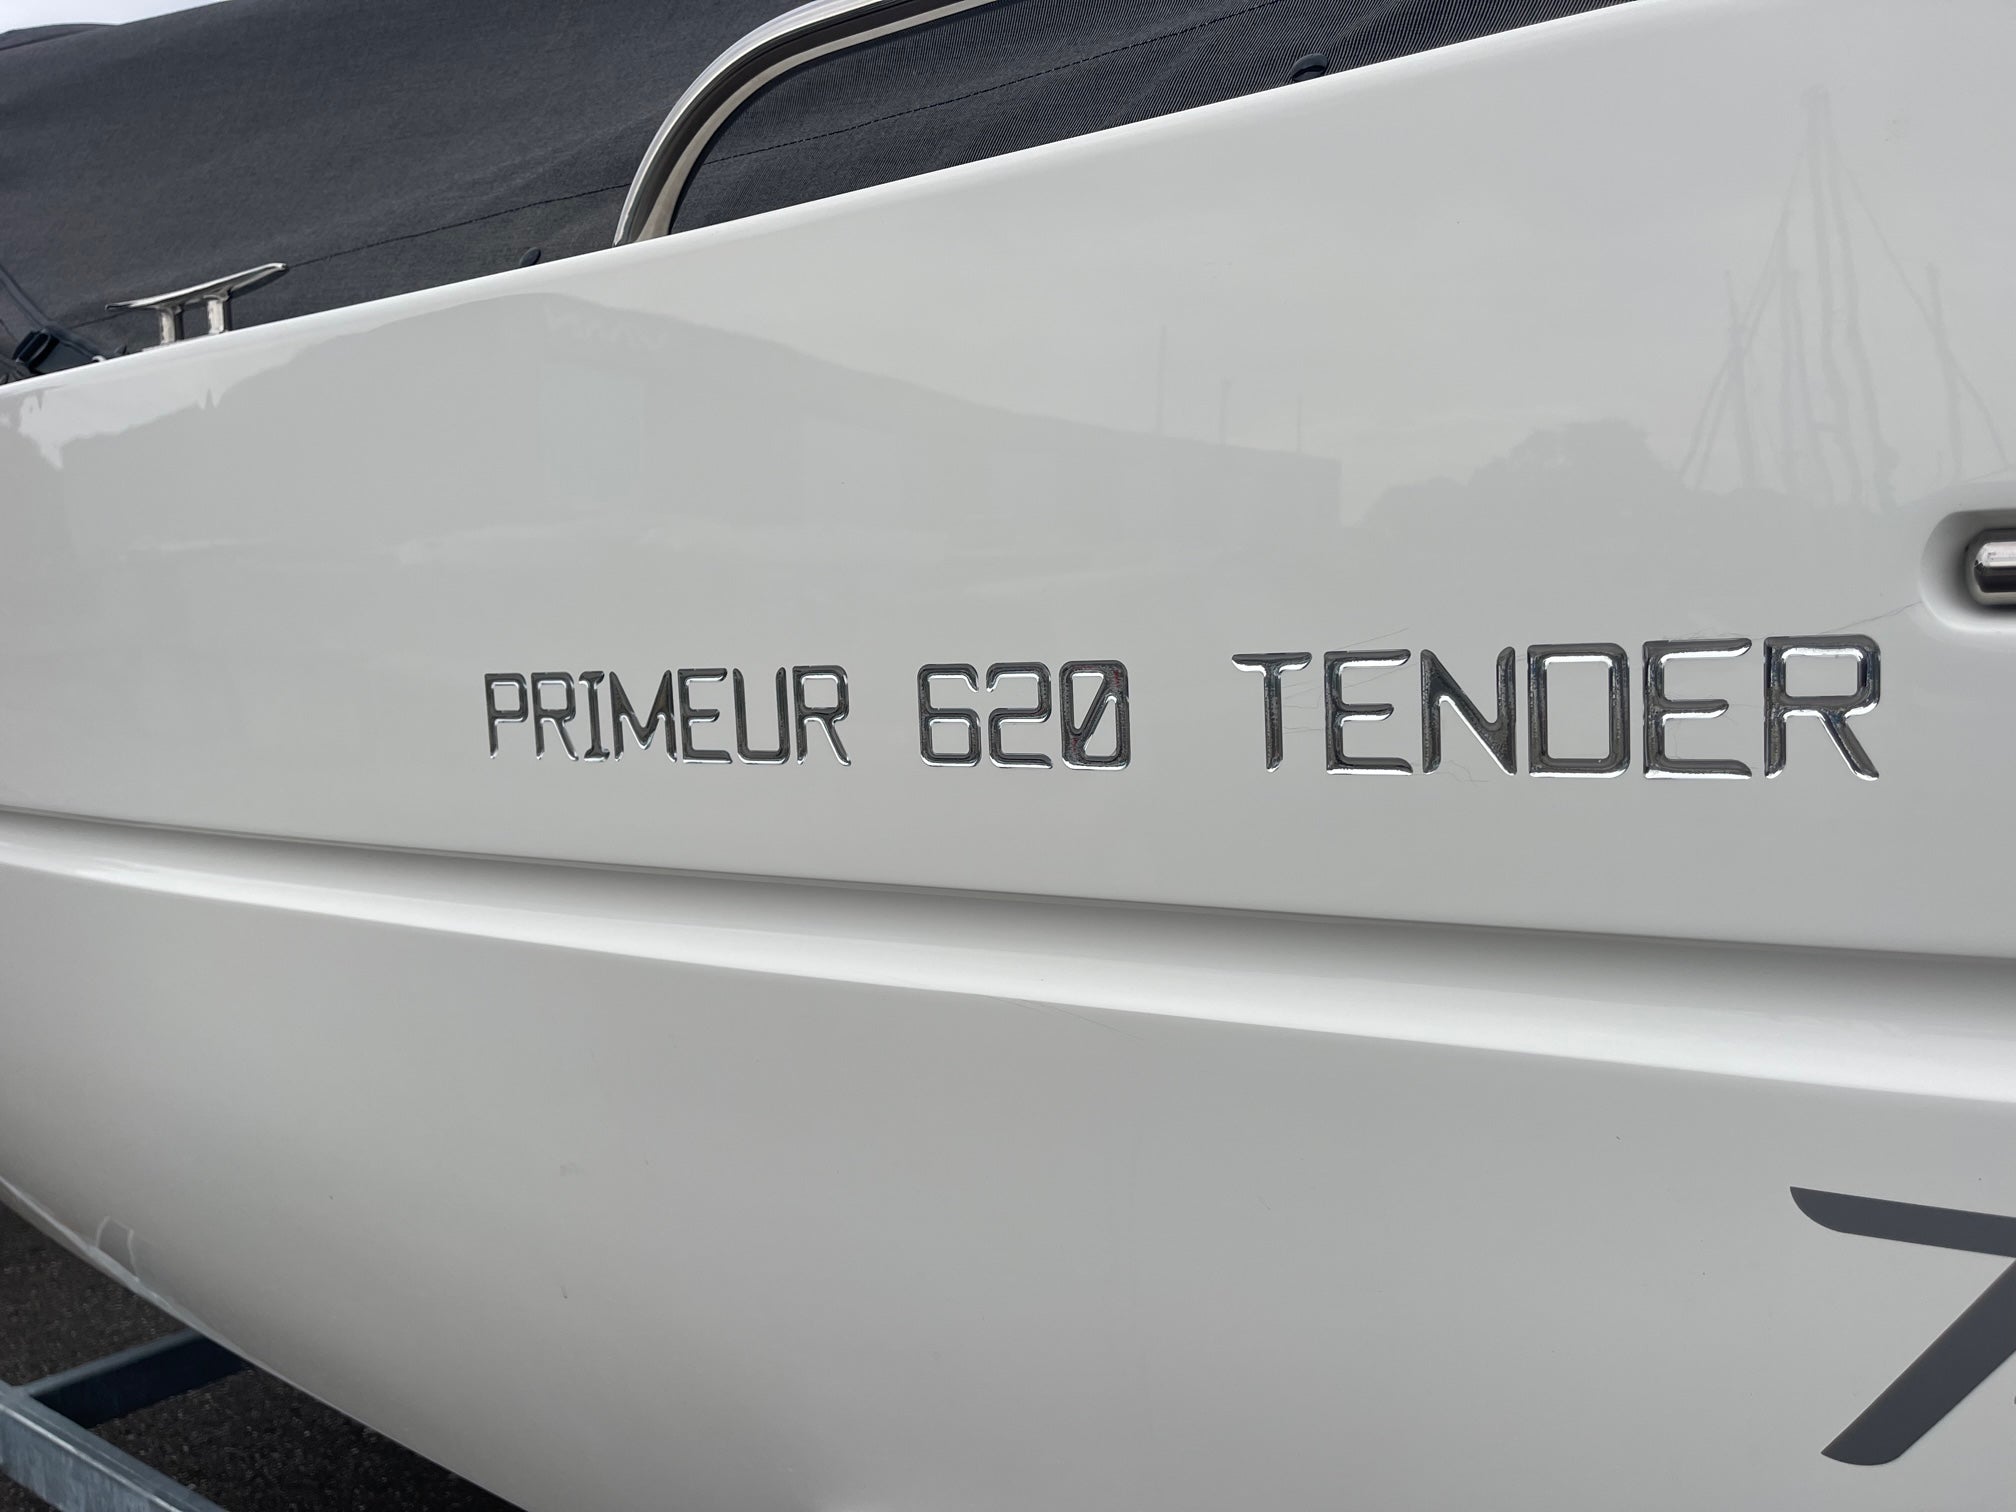 Primeur 620 tender met Suzuki 40/60 pk montage